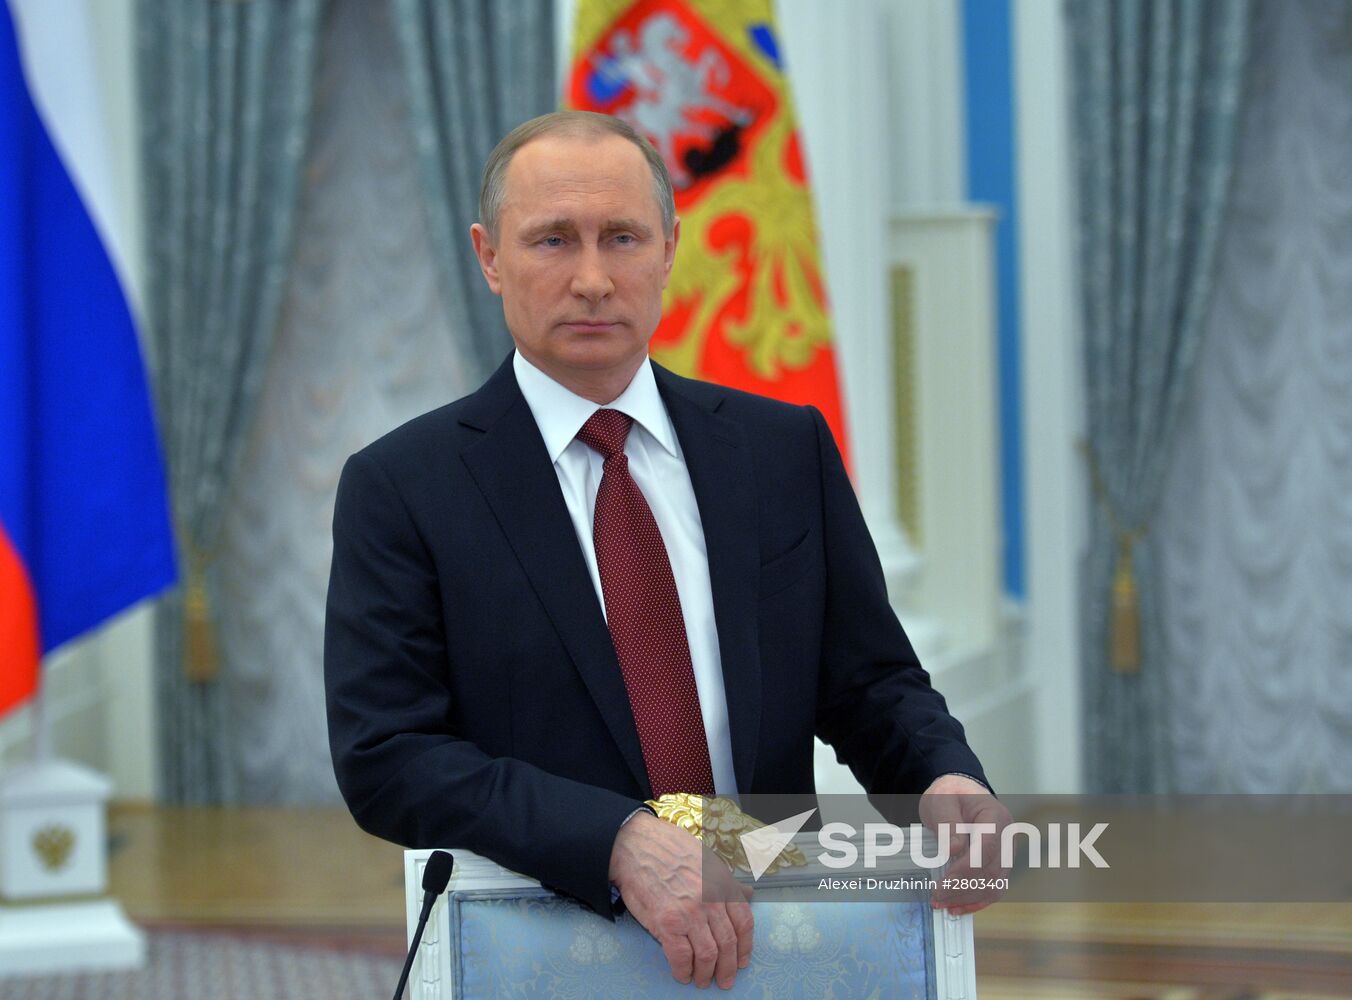 President Putin wishes Russian women a happy Women's Day